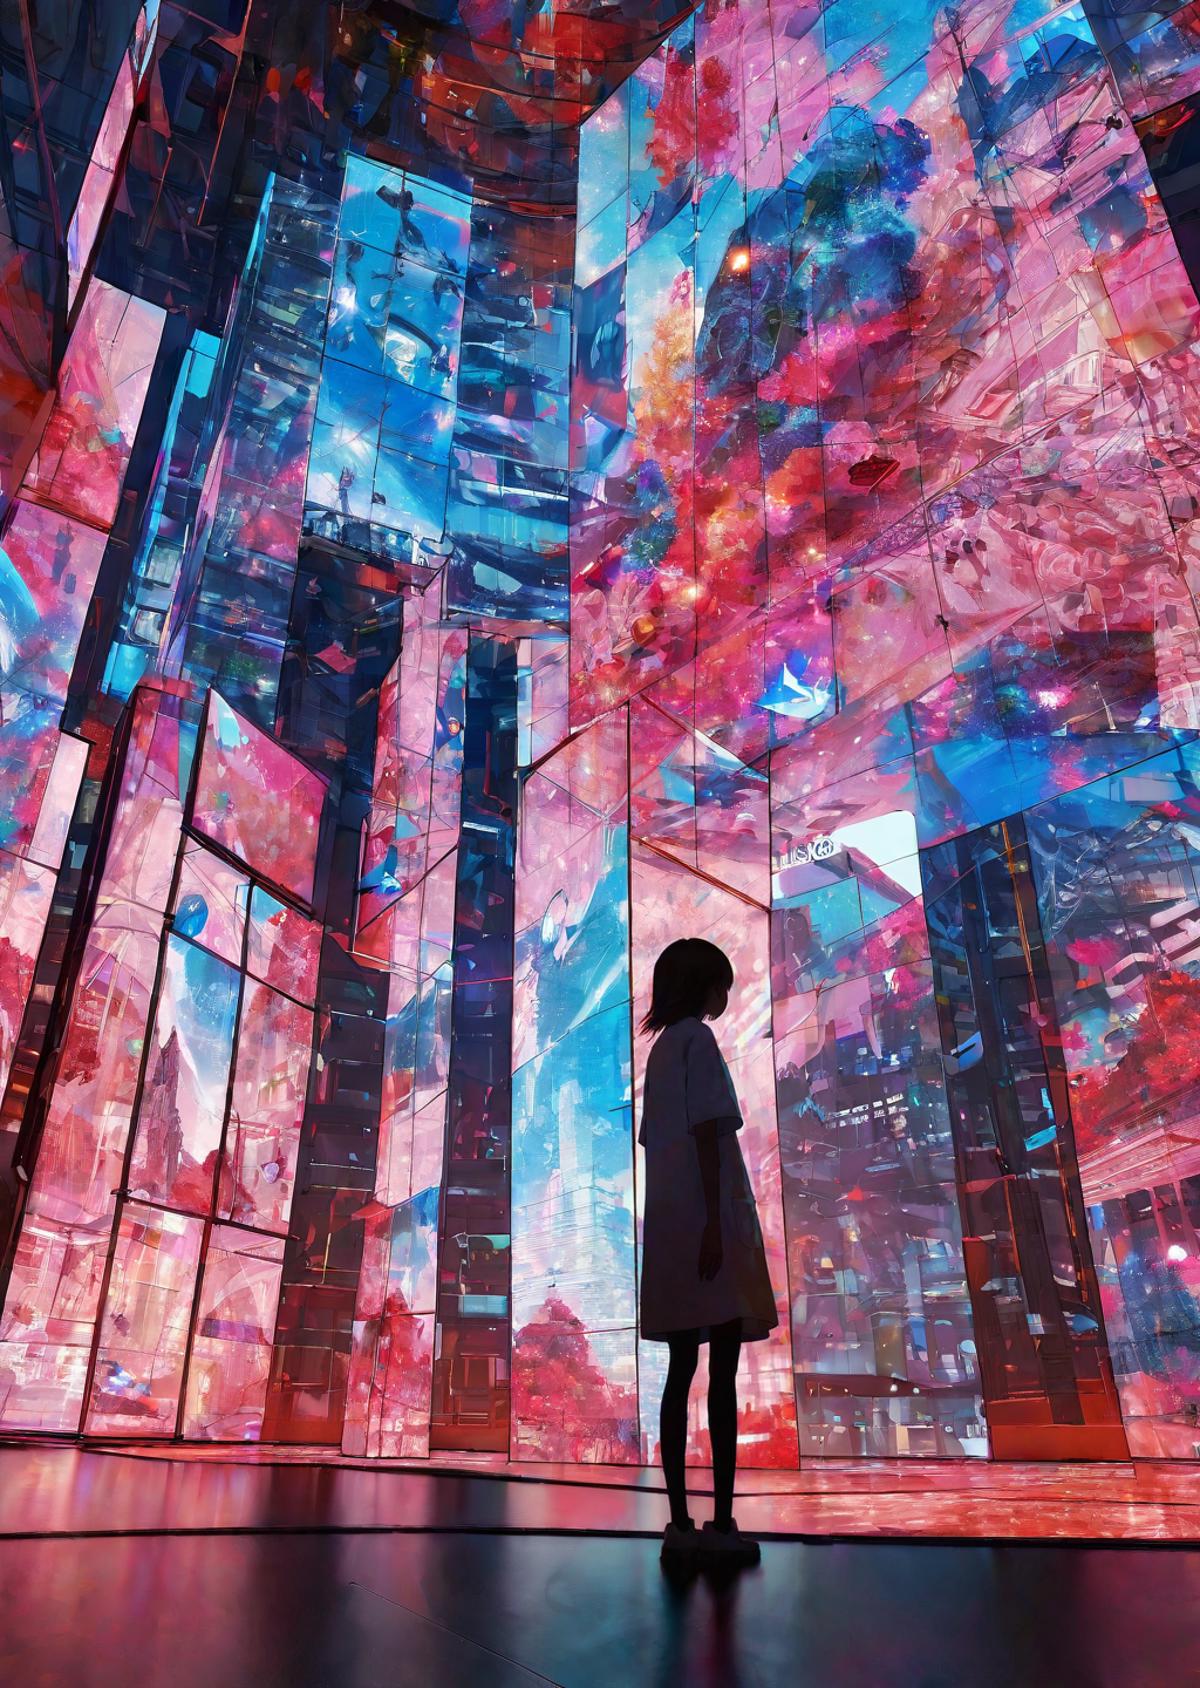 flat color , depth of field 
(Chiharu Shiota) colorful, dream-like, female-figures, immersive, installation, playful, Swis...